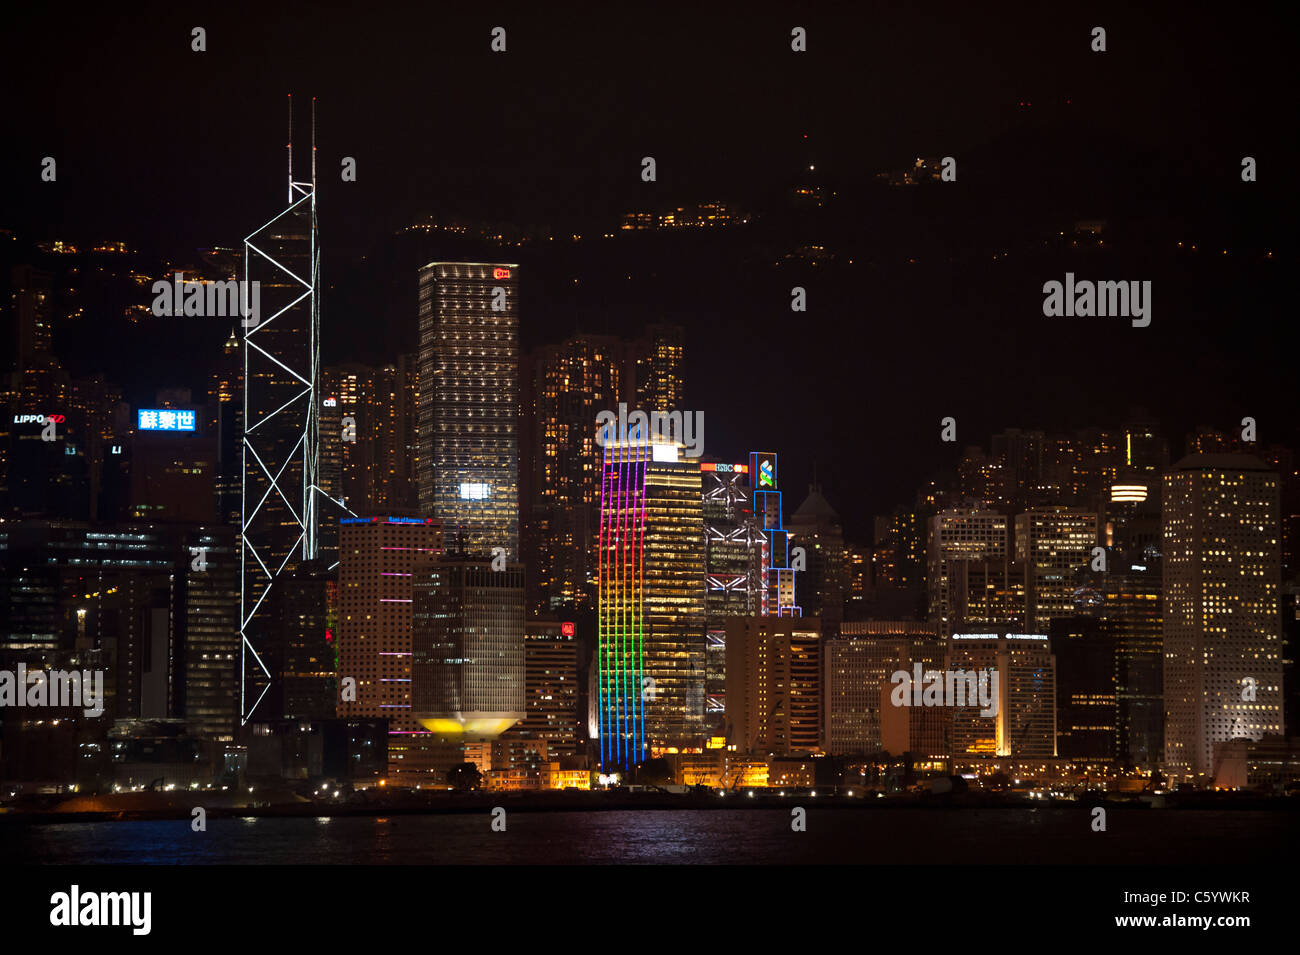 Hong kong skyline at night hi-res stock photography and images - Alamy